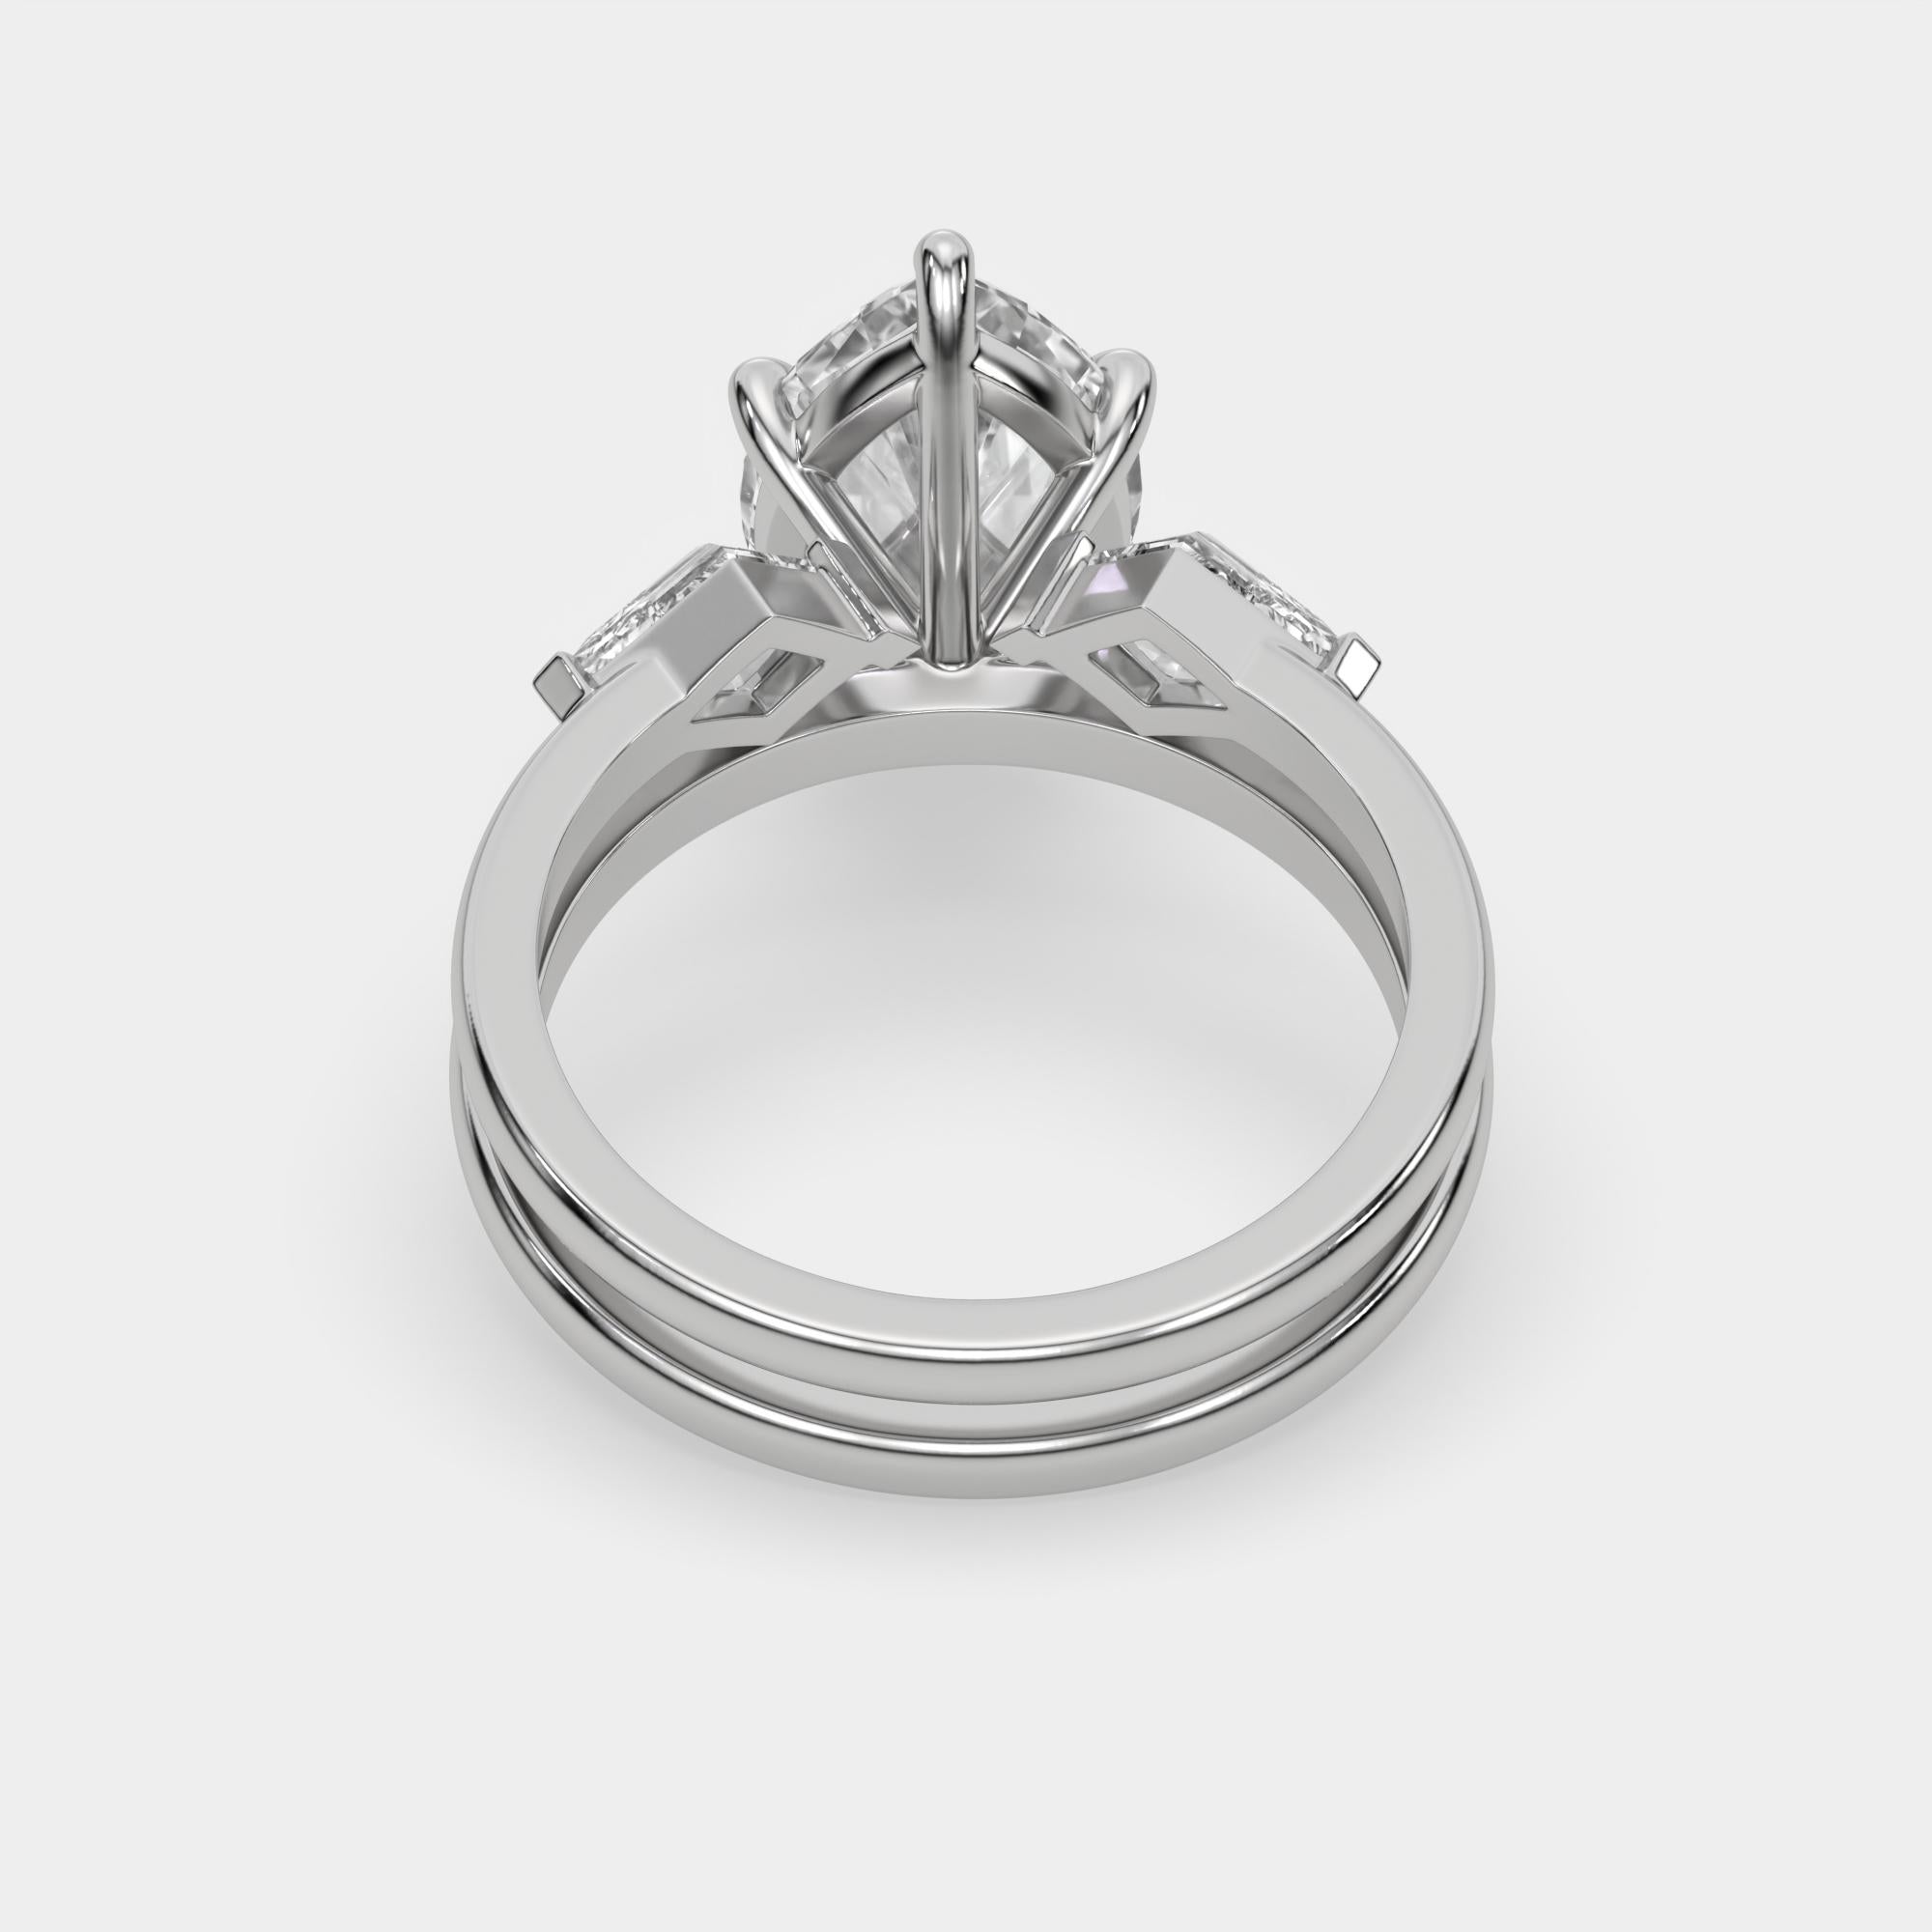 Marquise cut Moissanite engagement ring set